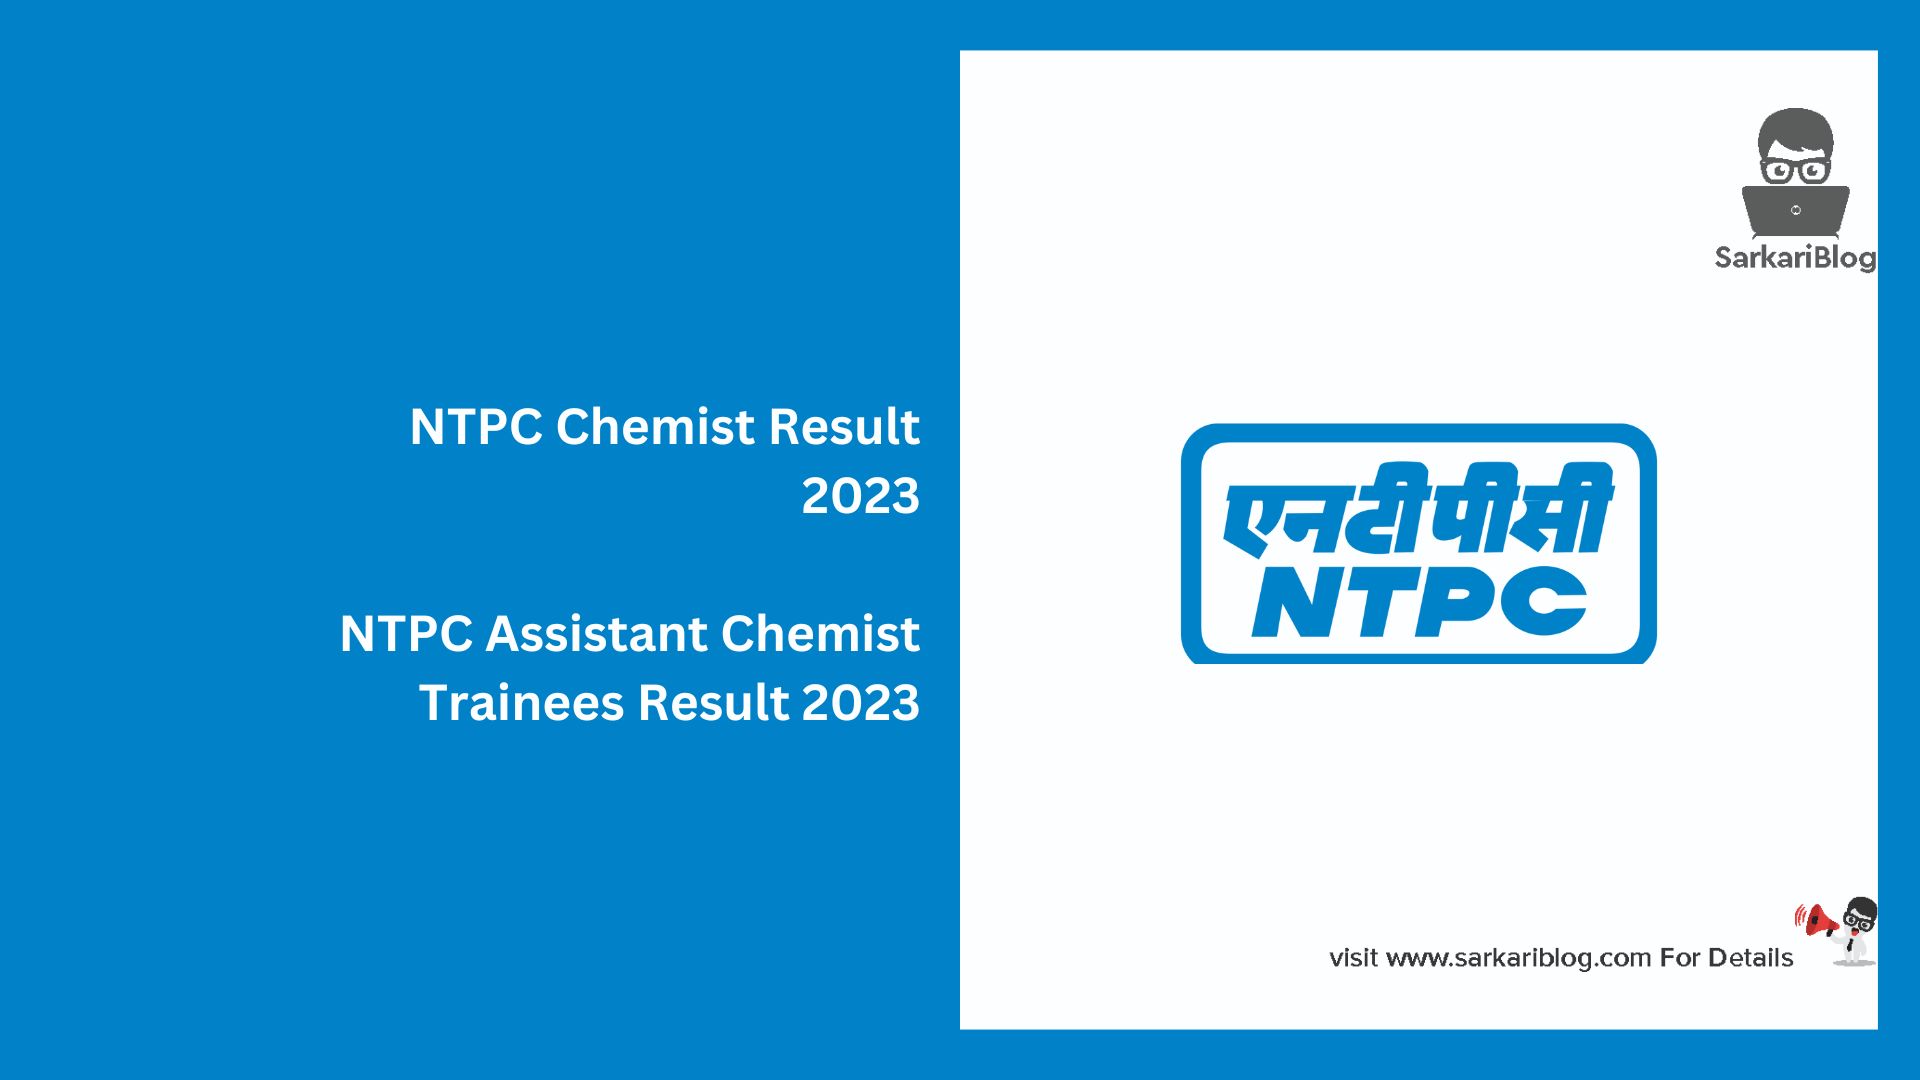 NTPC Chemist Result 2023